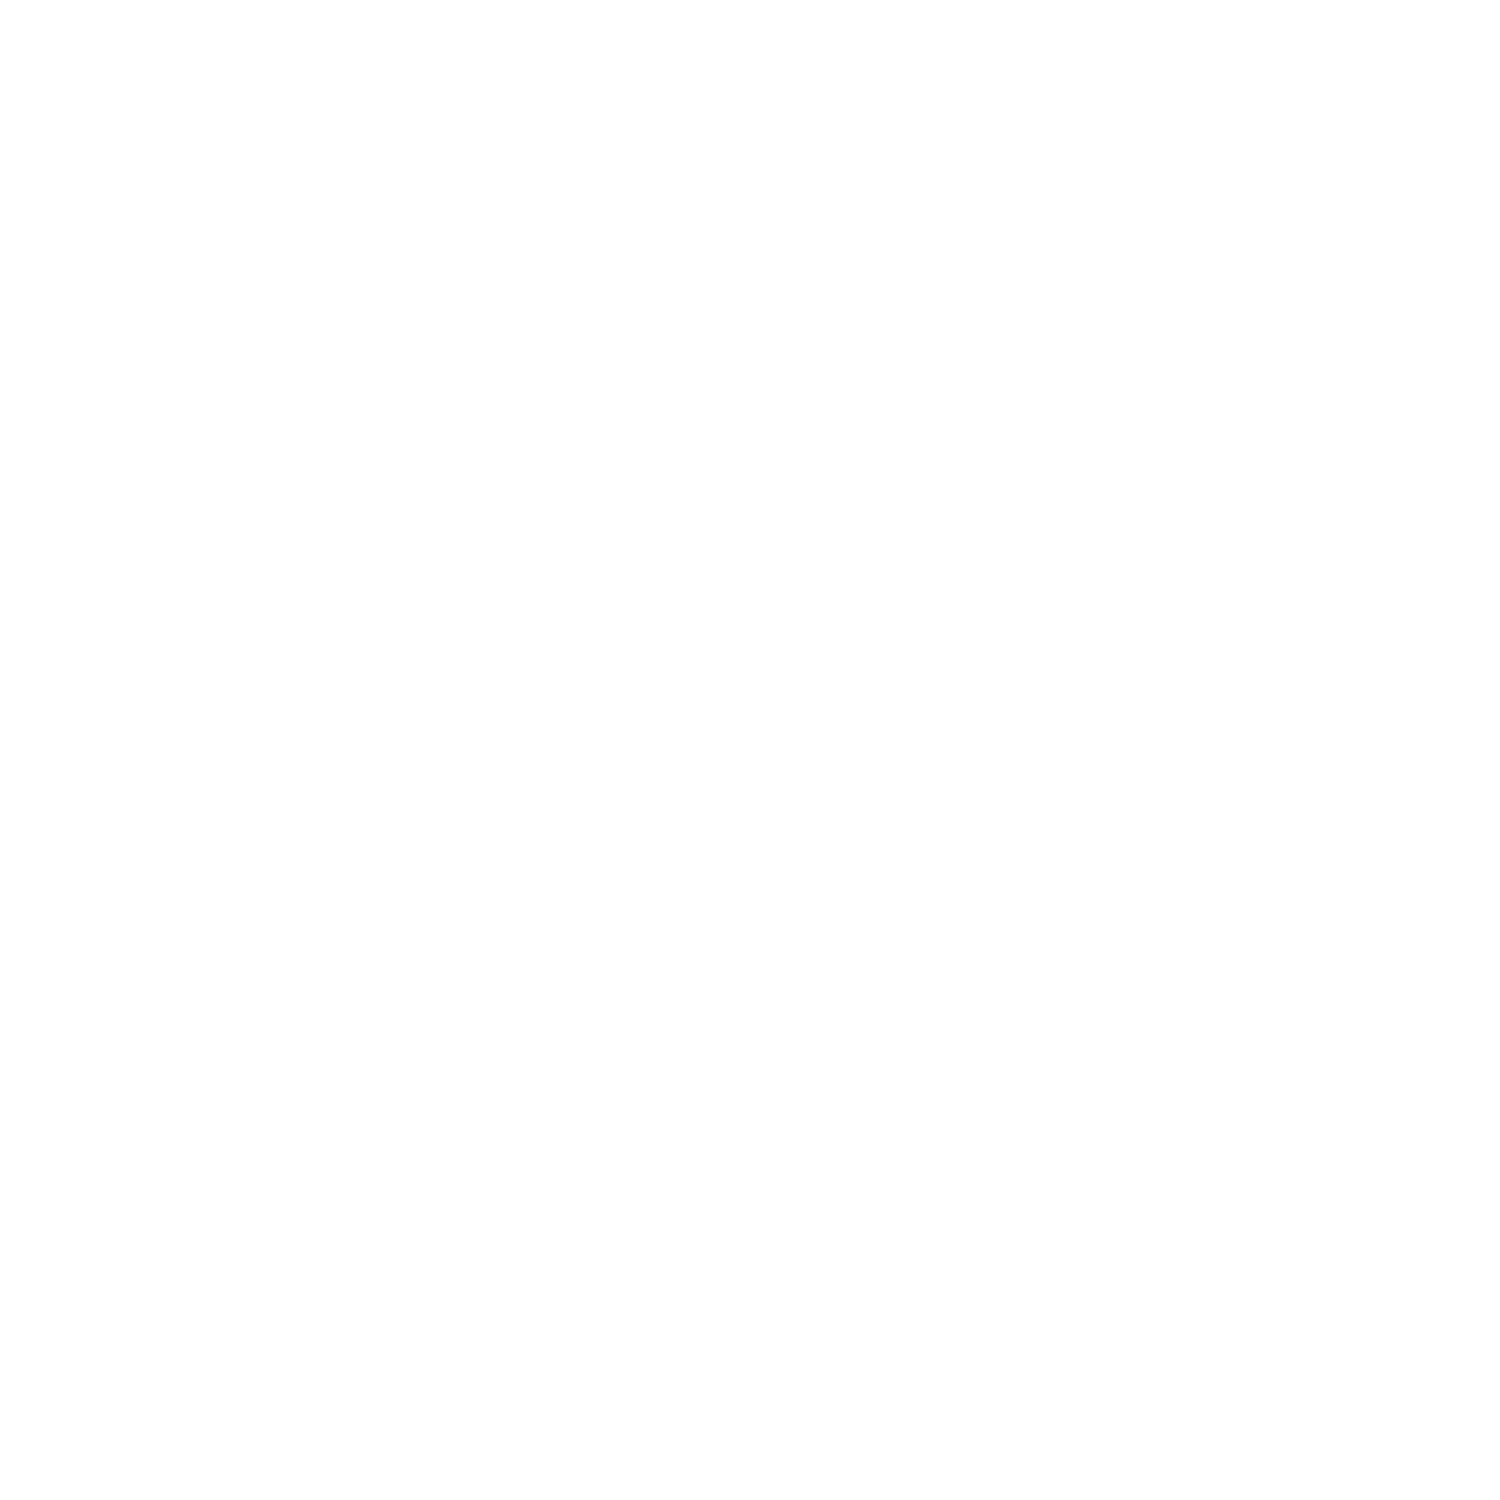 Savannahs Event Center